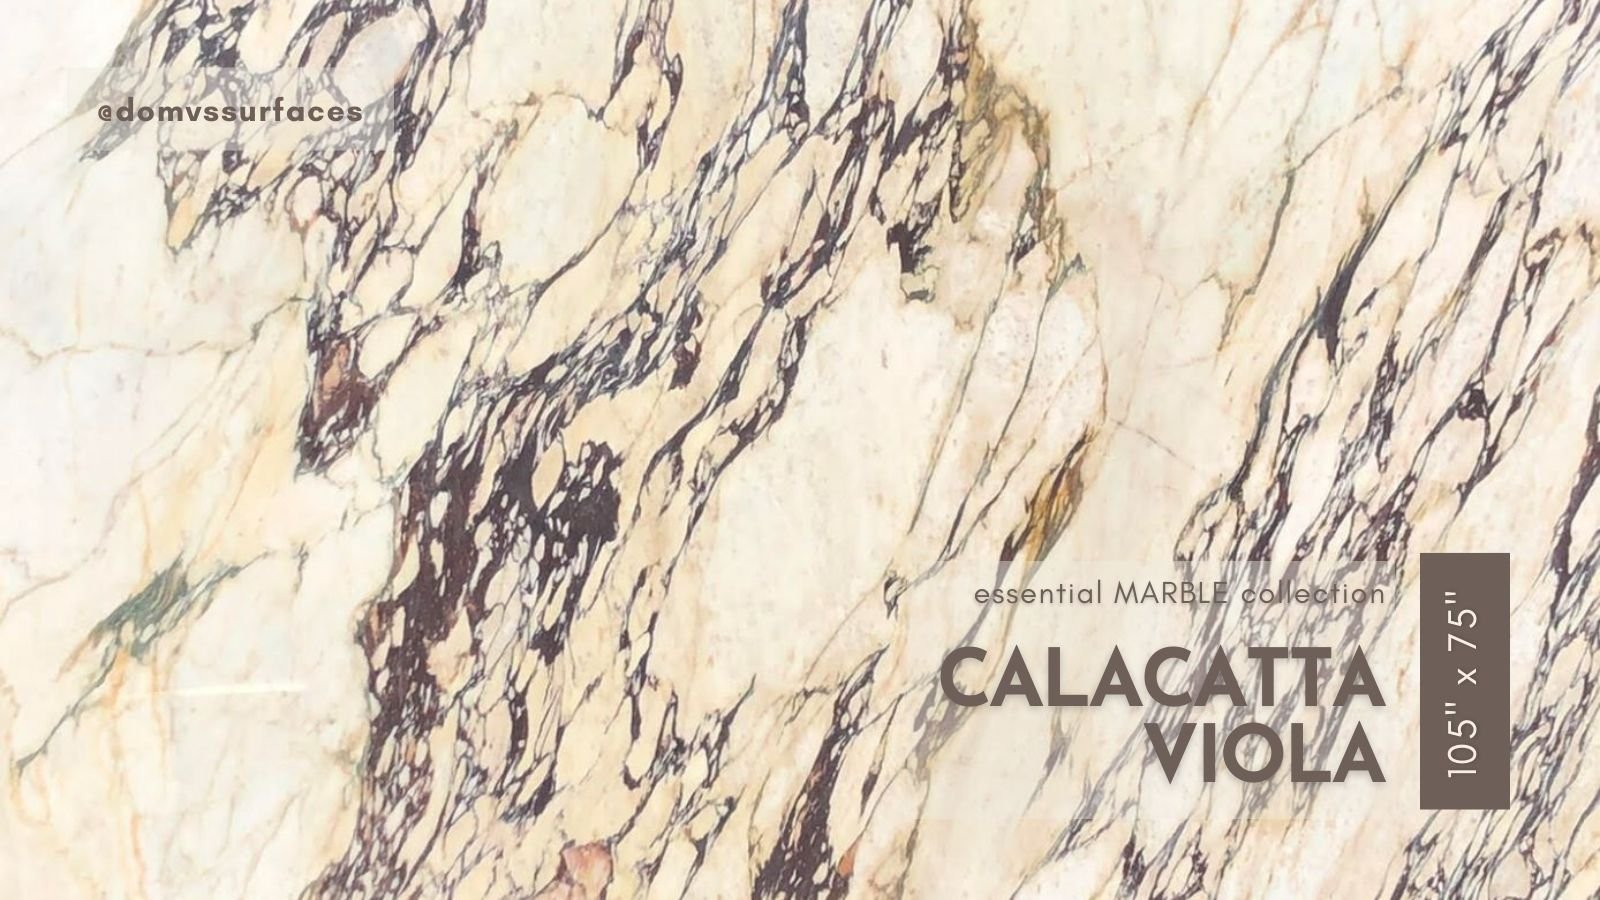 Calacatta Viola Marble Slab 105 x 75 2CMMB DOMVS SURFACES.jpg